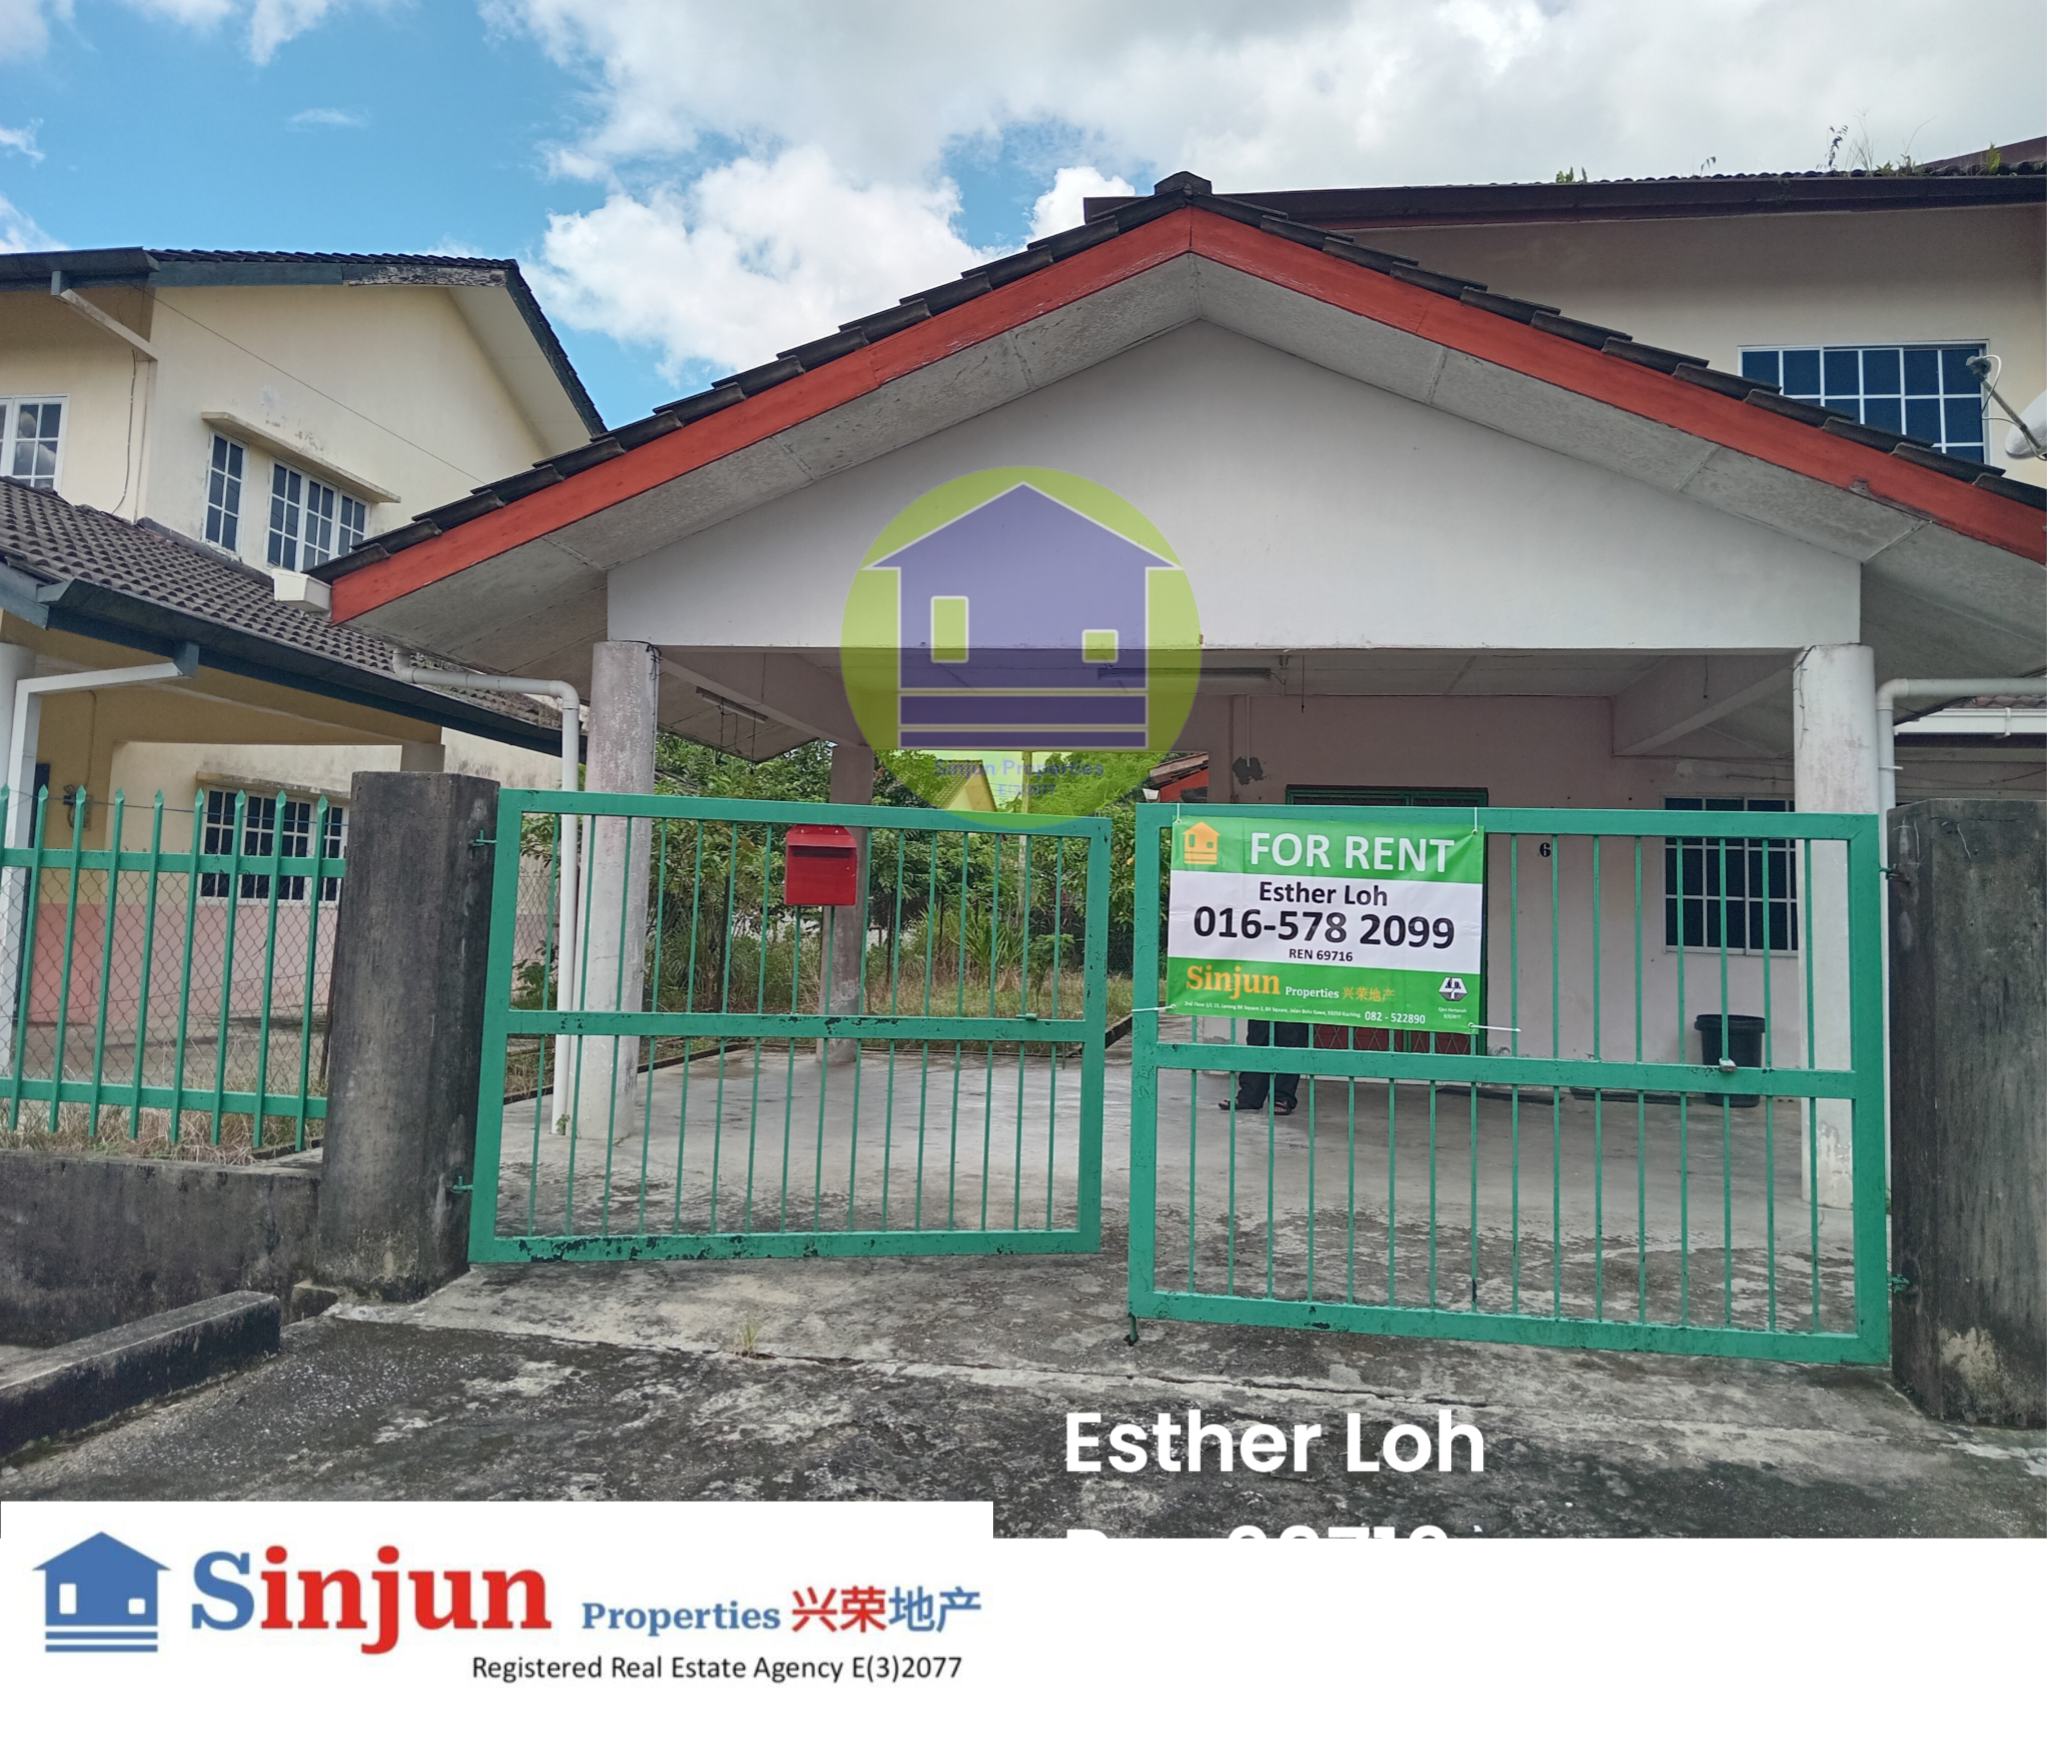 For rent corner double storey terrace house at Batu 9 Jalan penrissen kuching serian